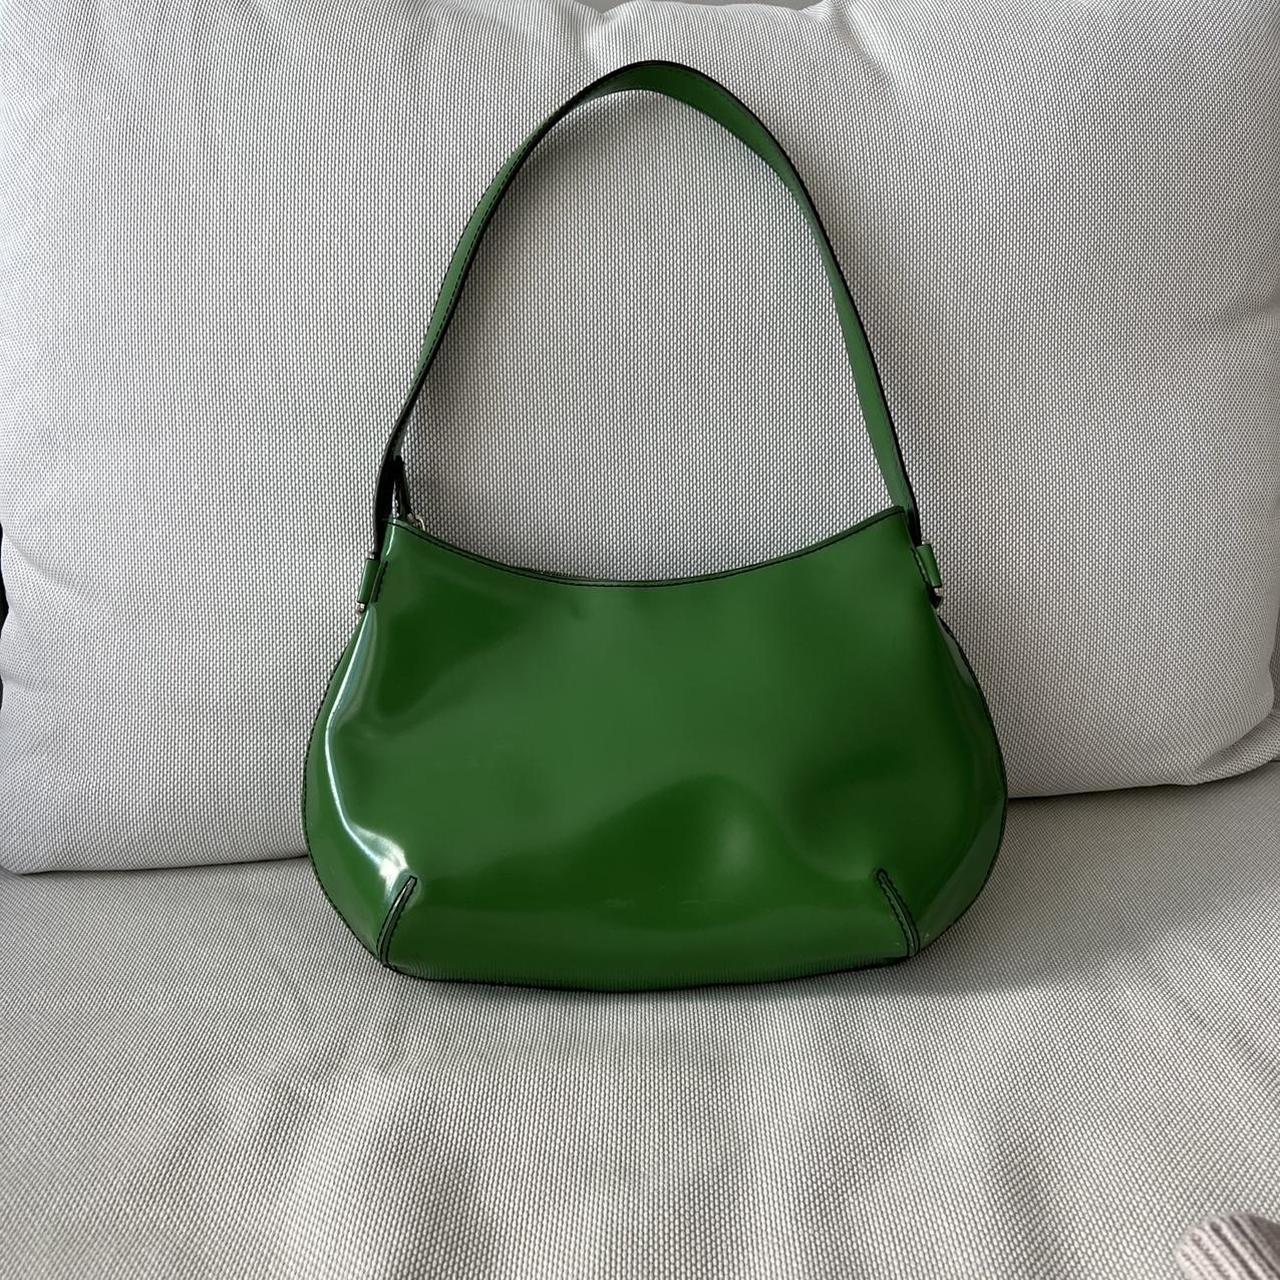 DKNY Women's Green Bag